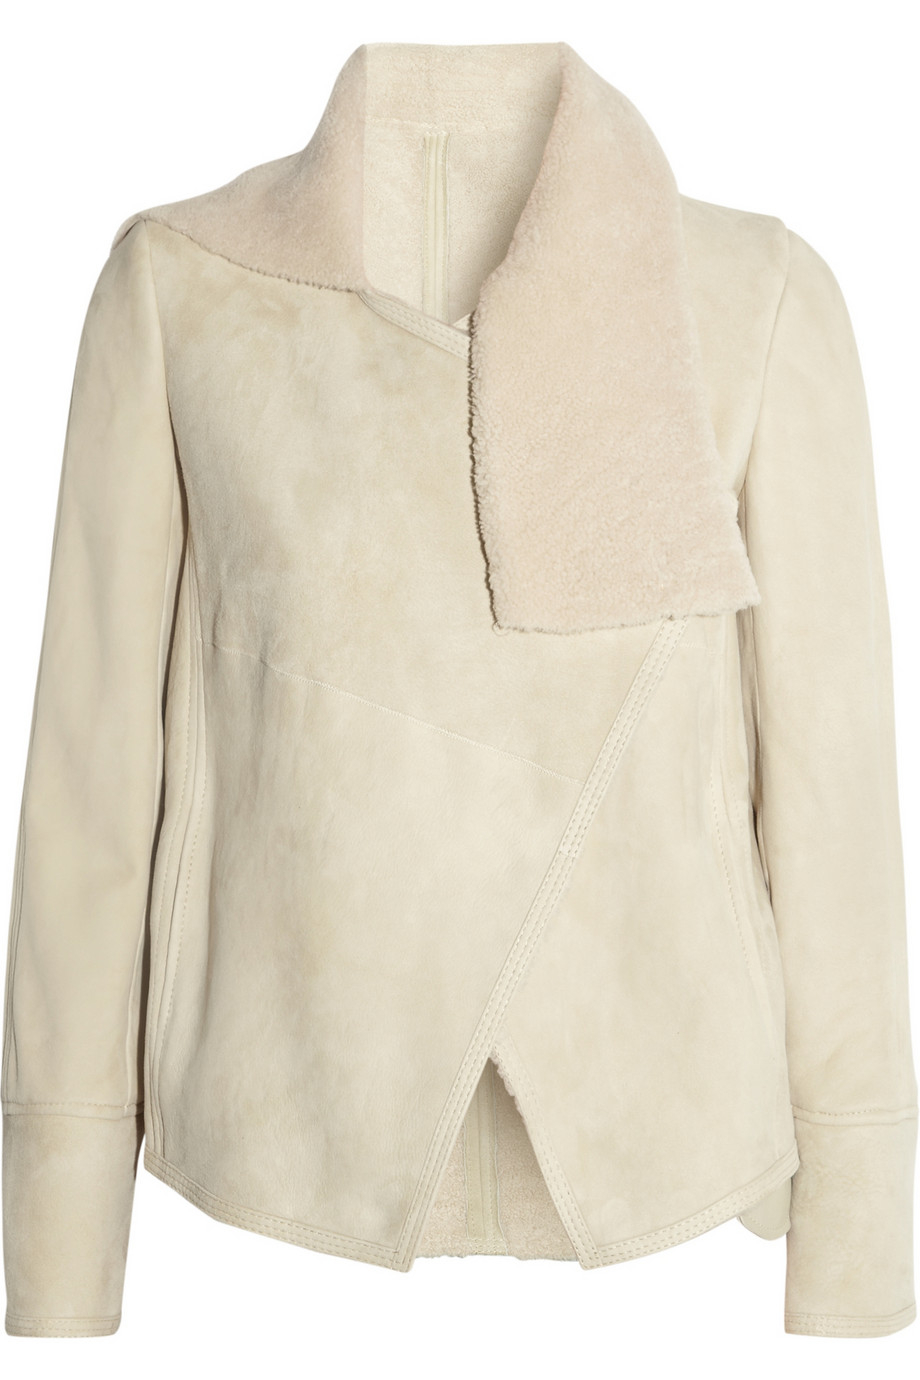 Isabel Marant Clayne Shearling Jacket in Ecru (Natural) - Lyst